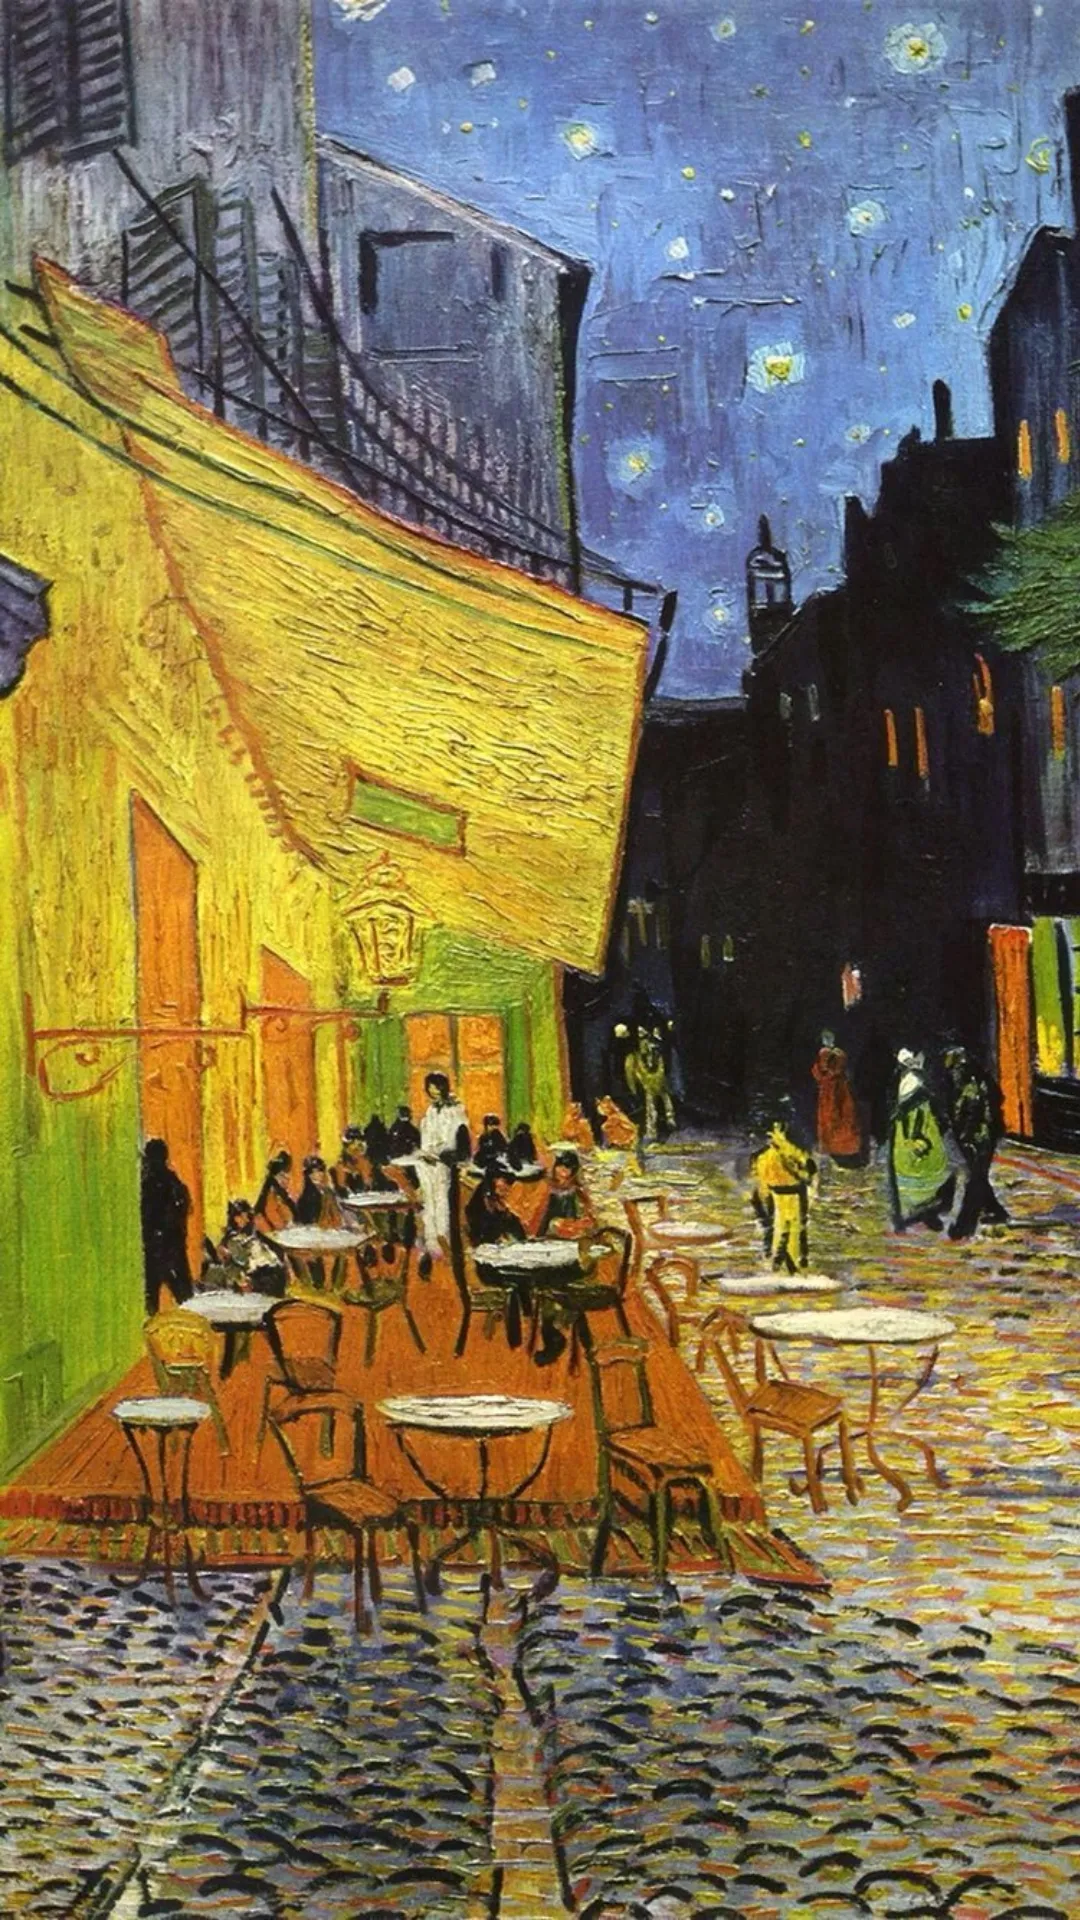 Obras de Van Gogh